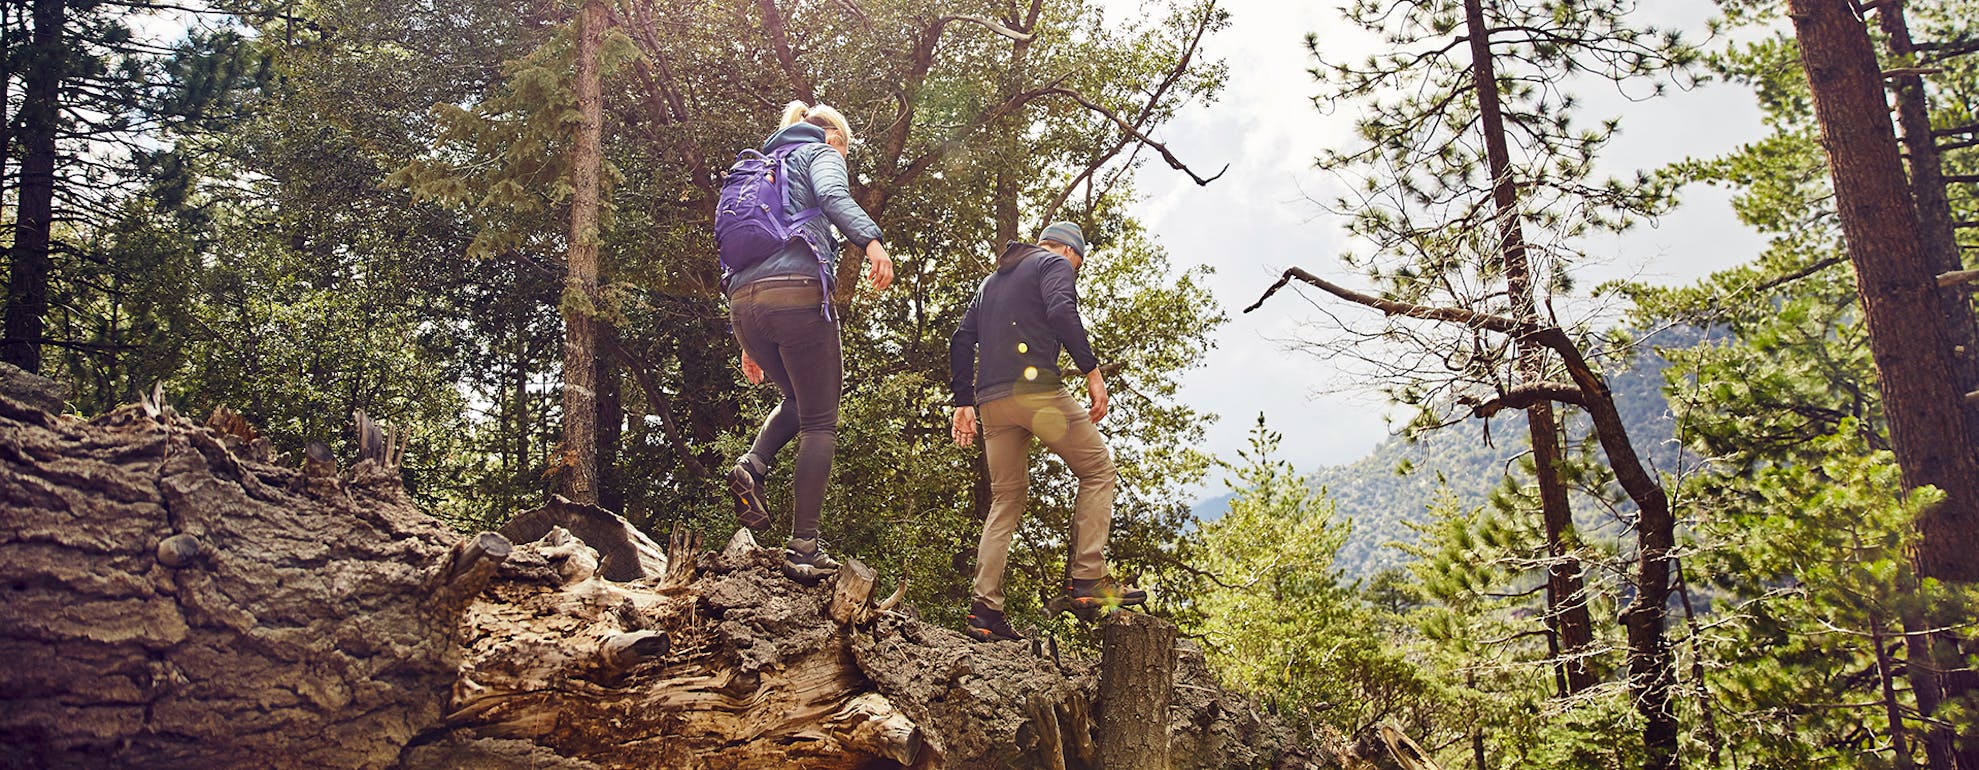 millennial-hiking-trend-report-uk